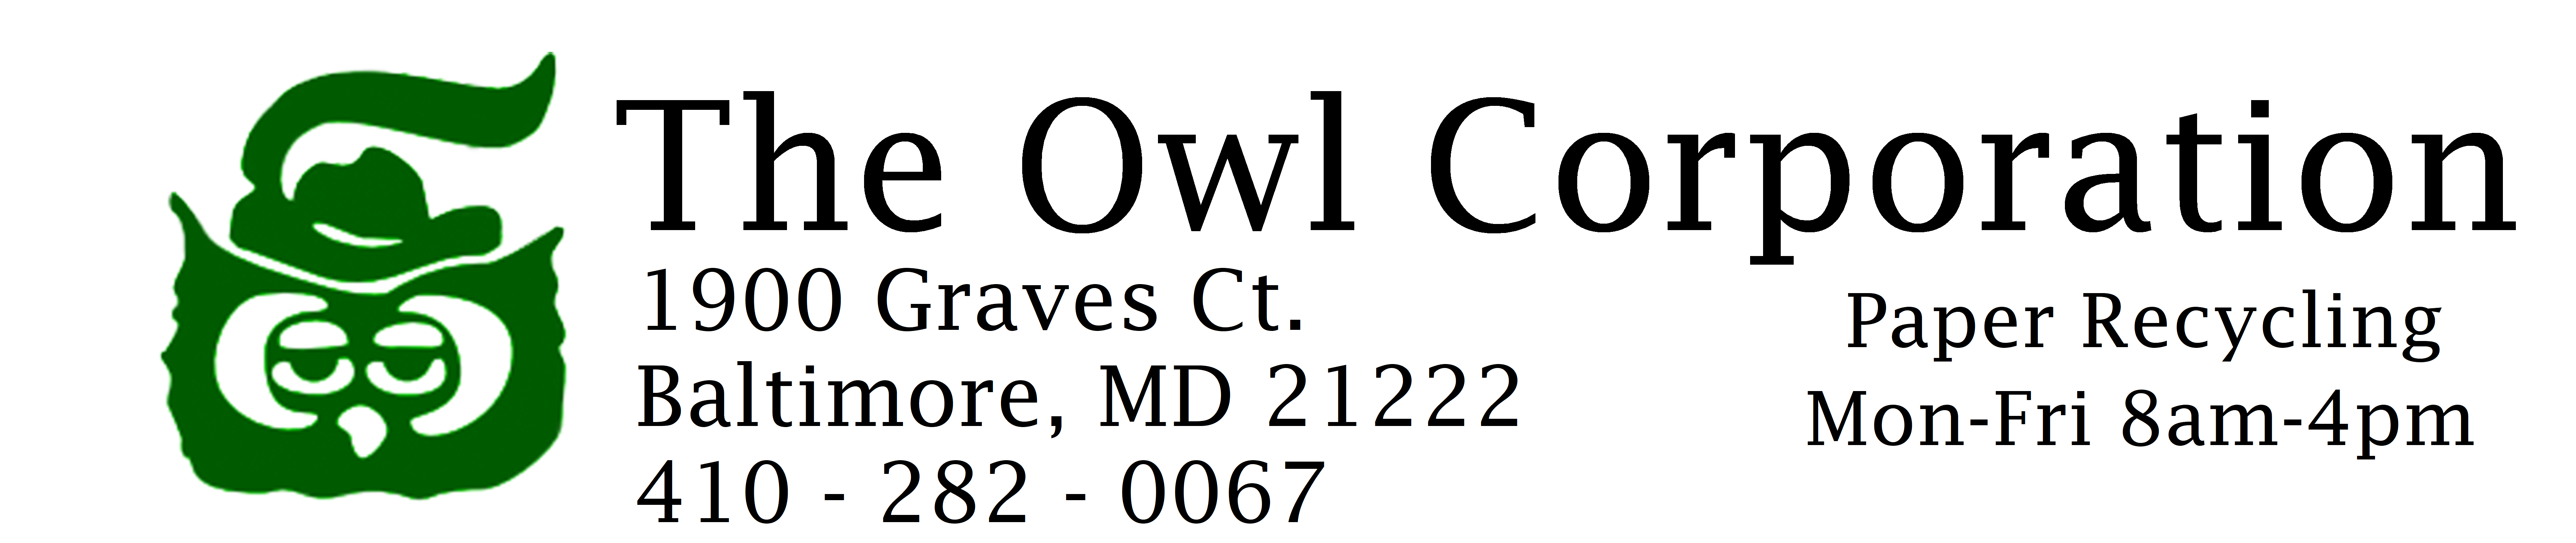 The Owl Corporation